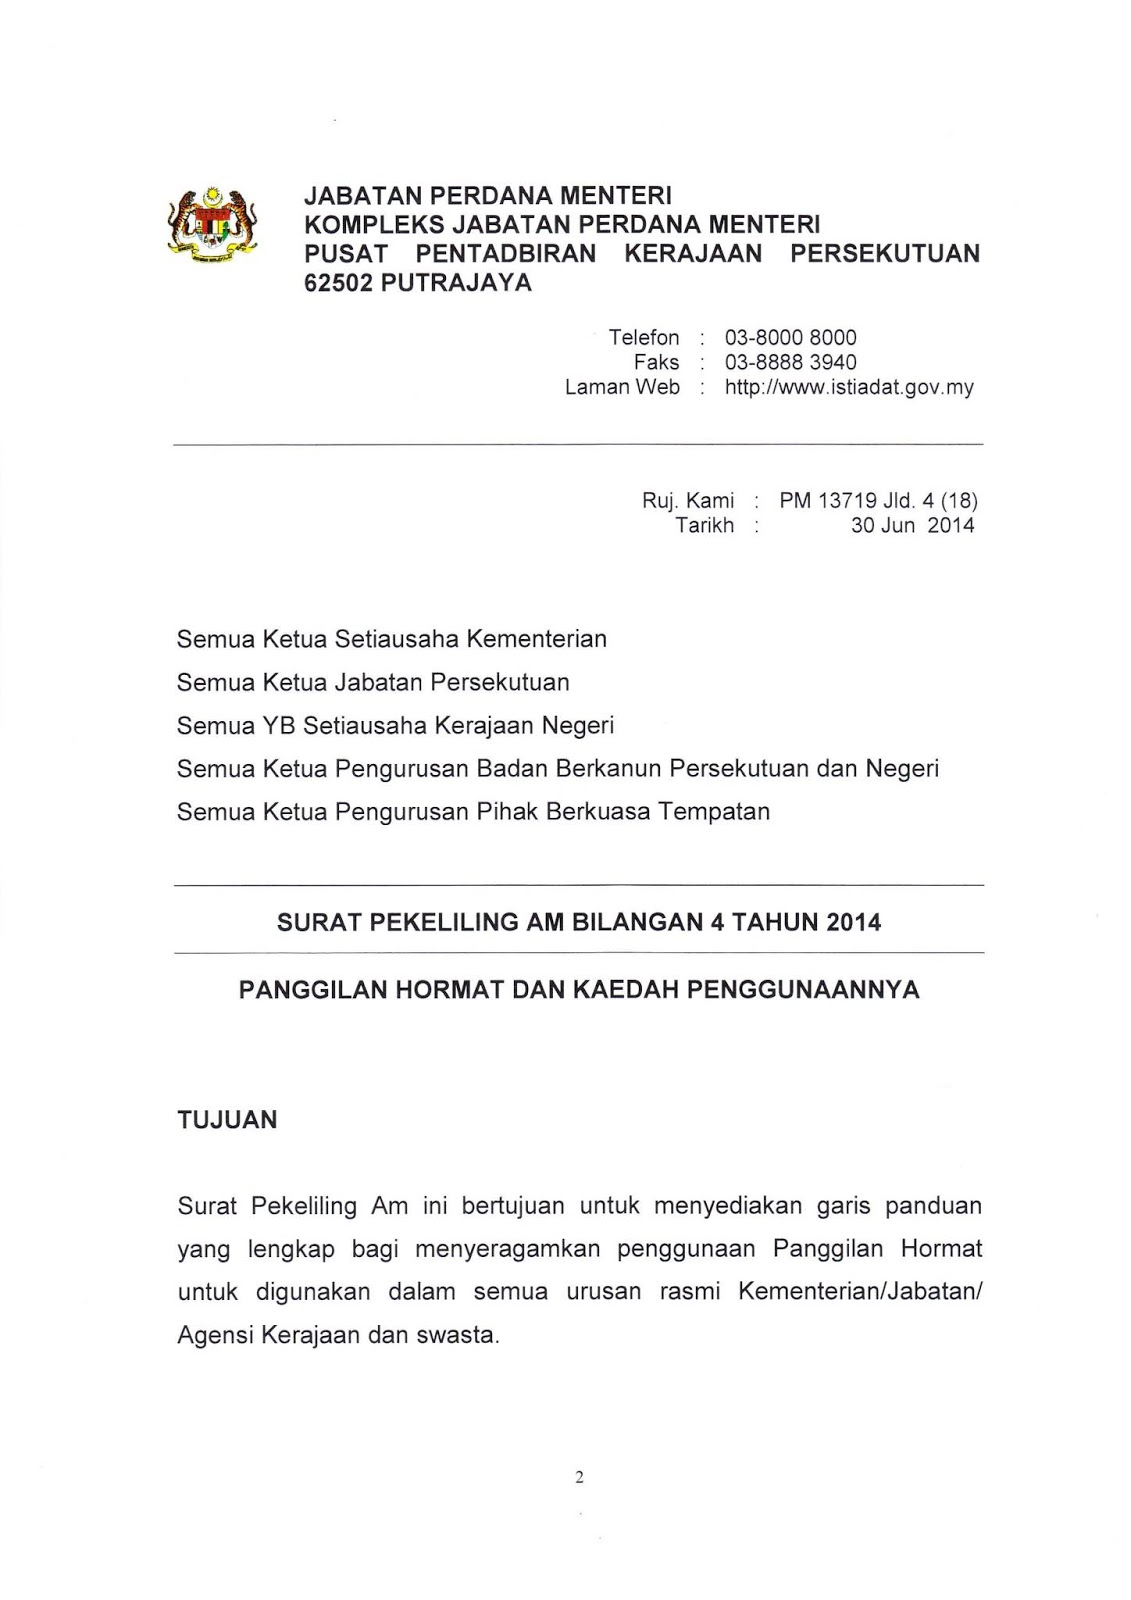 Contoh Surat Kunjungan Hormat Kepada Menteri Malaysia